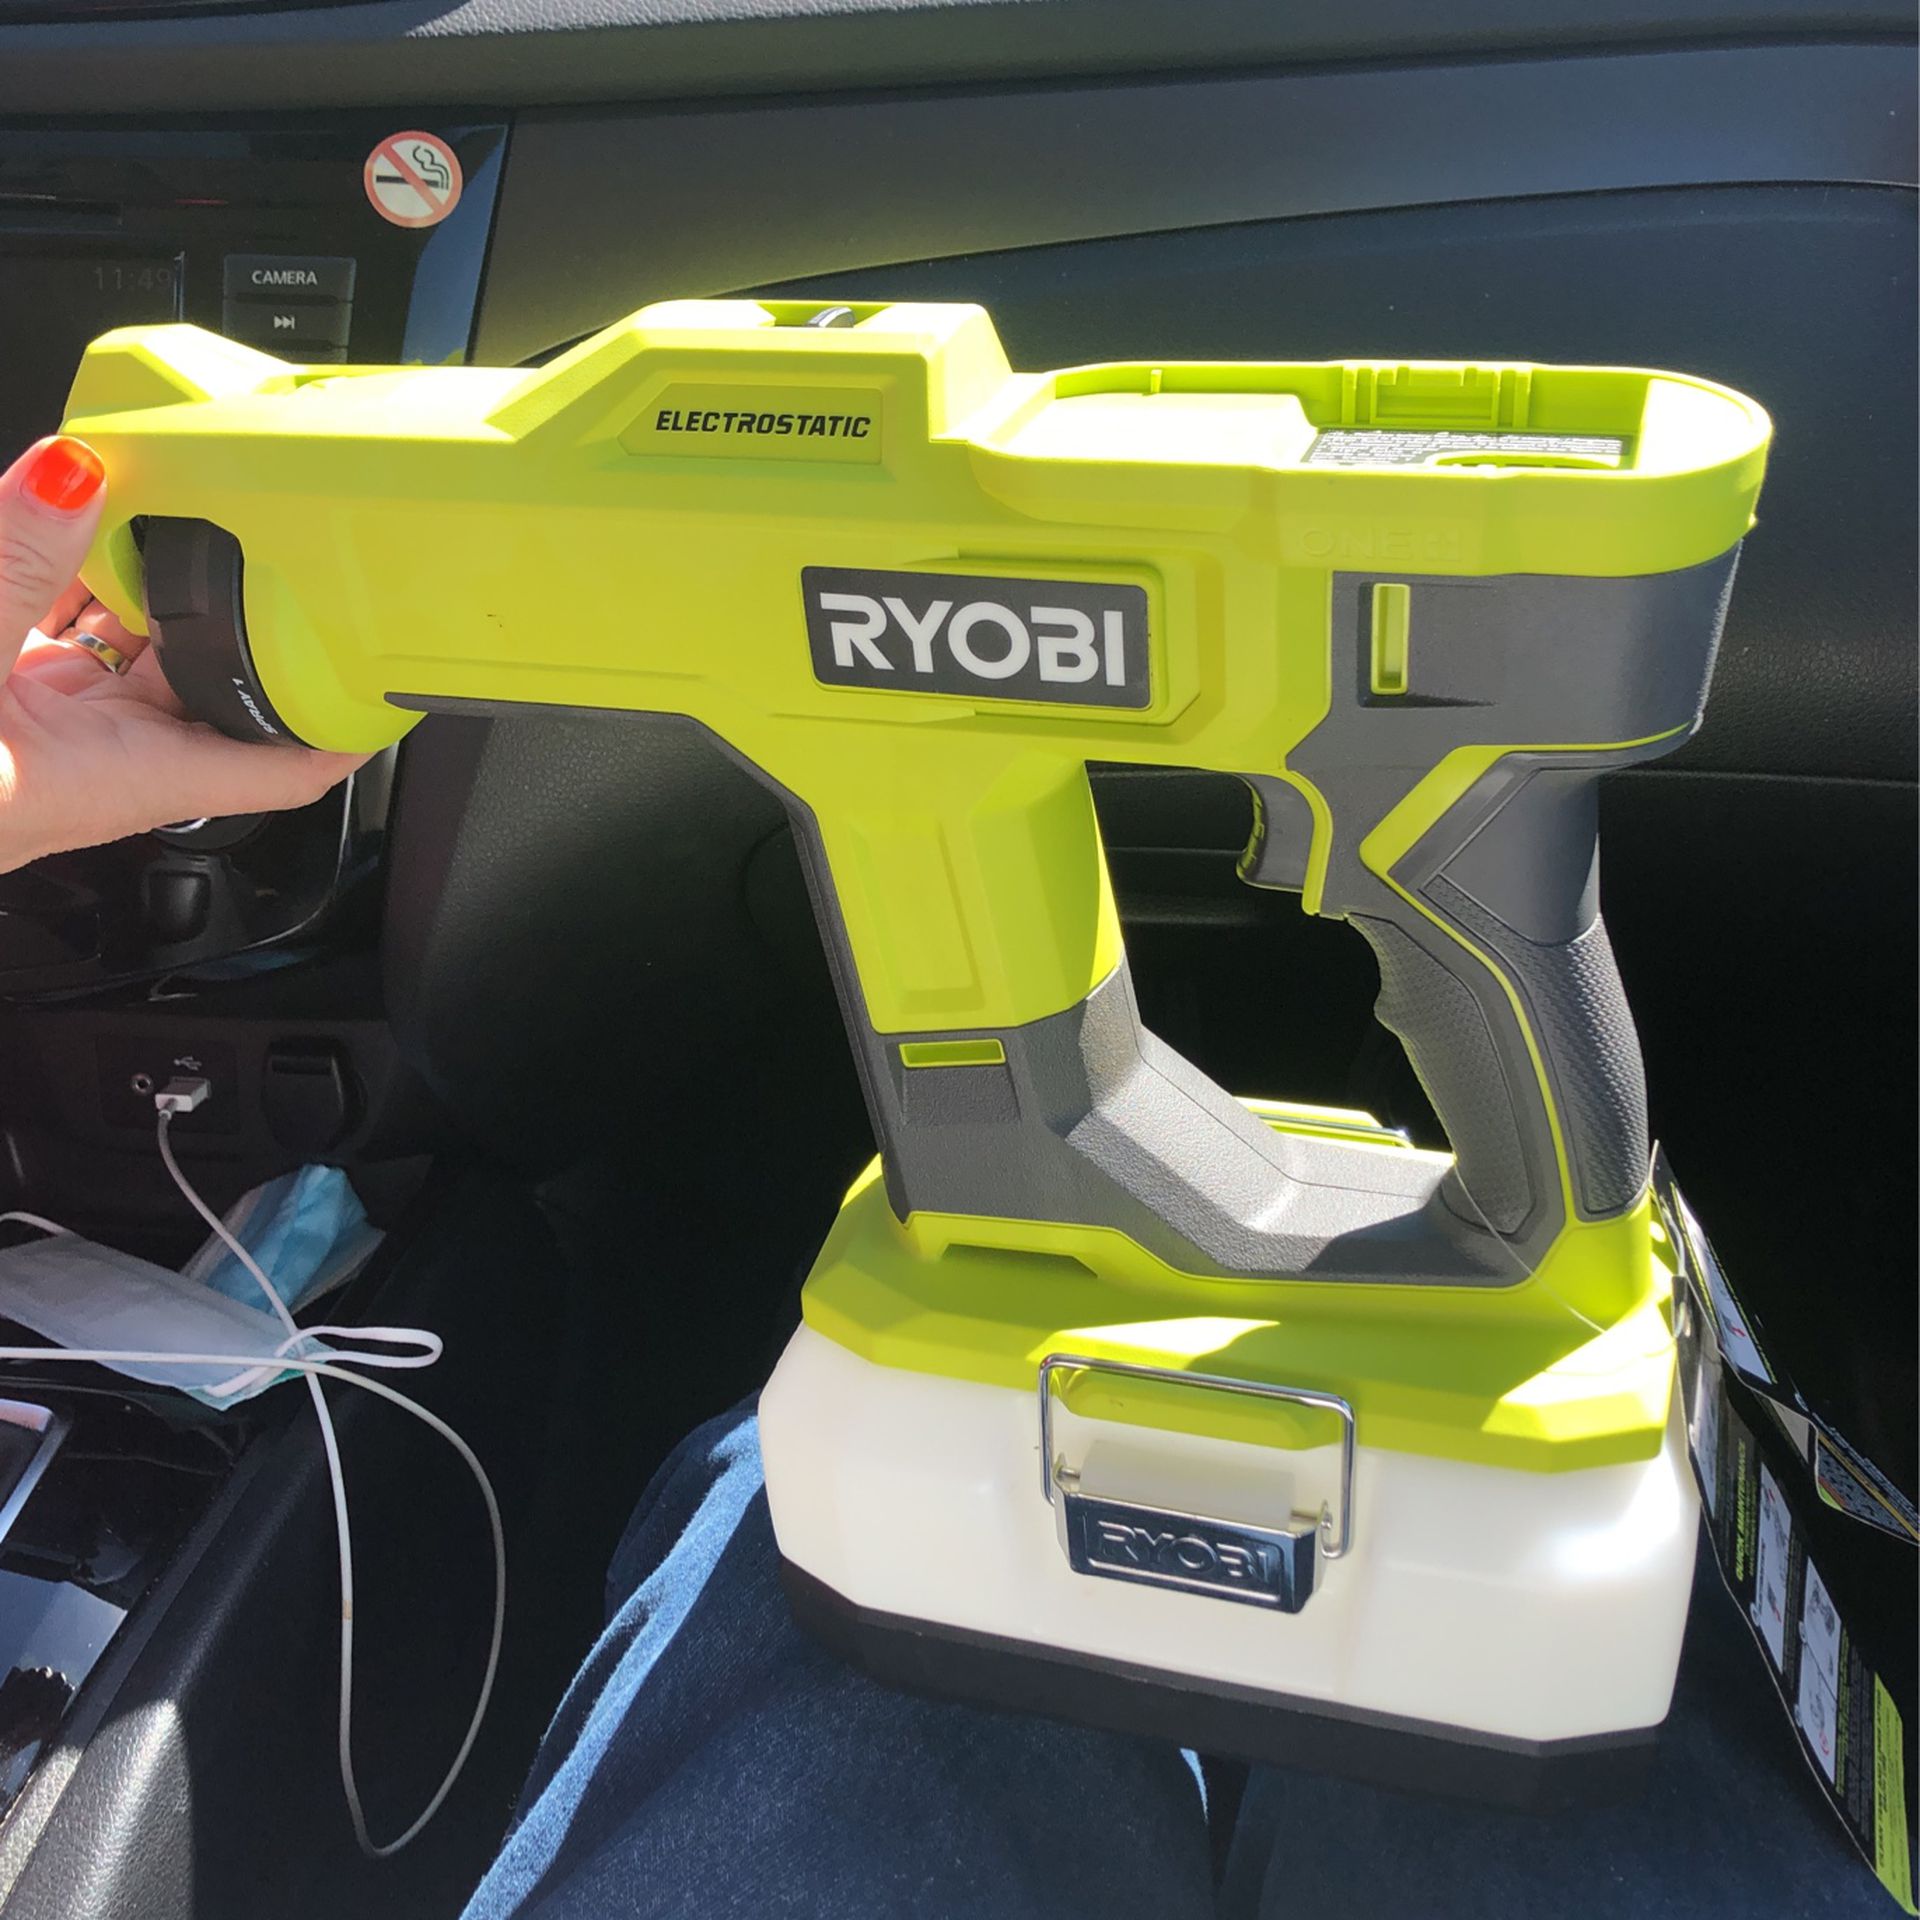 Ryobi  Electrostatic Sprayer  Brand New 